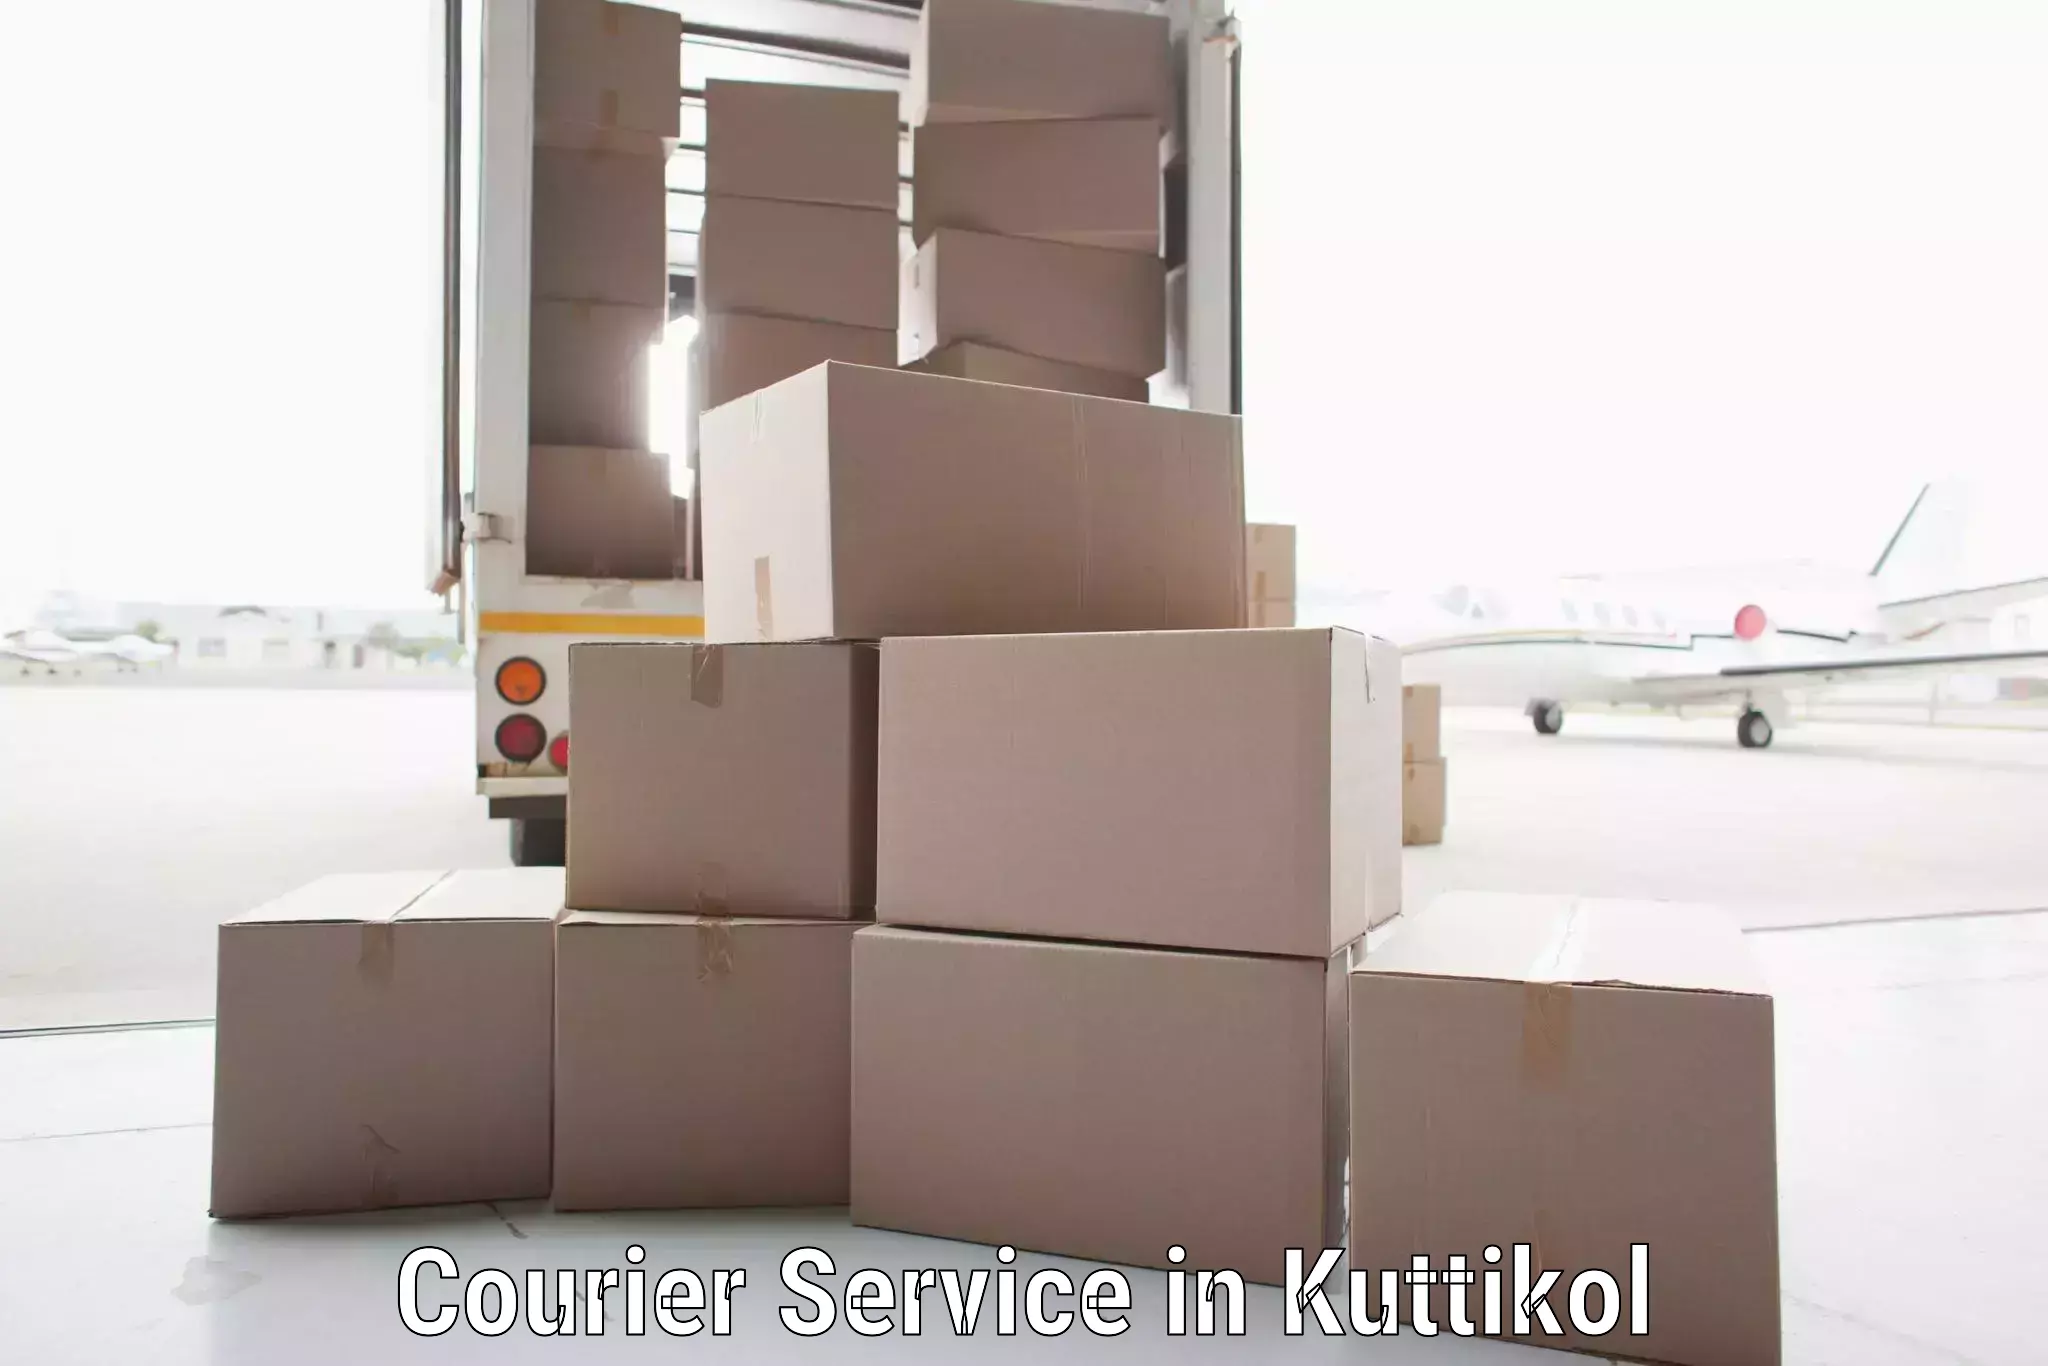 Nationwide courier service in Kuttikol